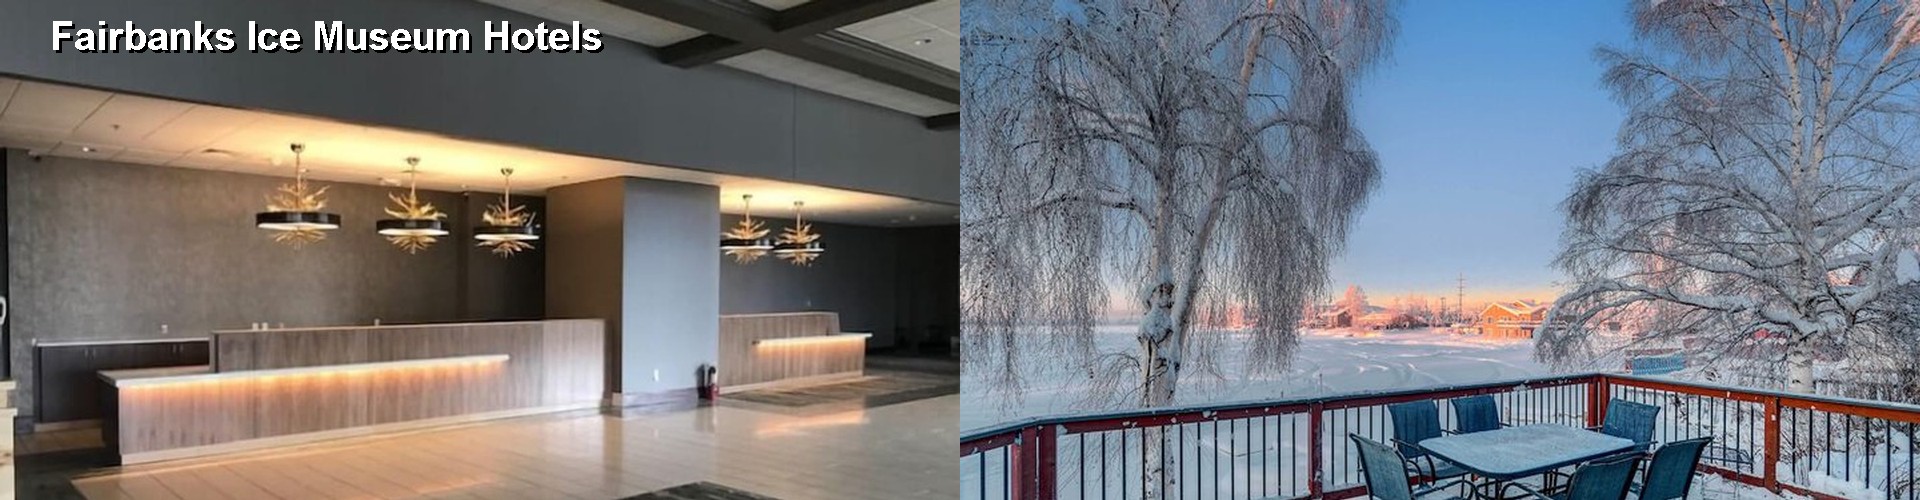 5 Best Hotels near Fairbanks Ice Museum